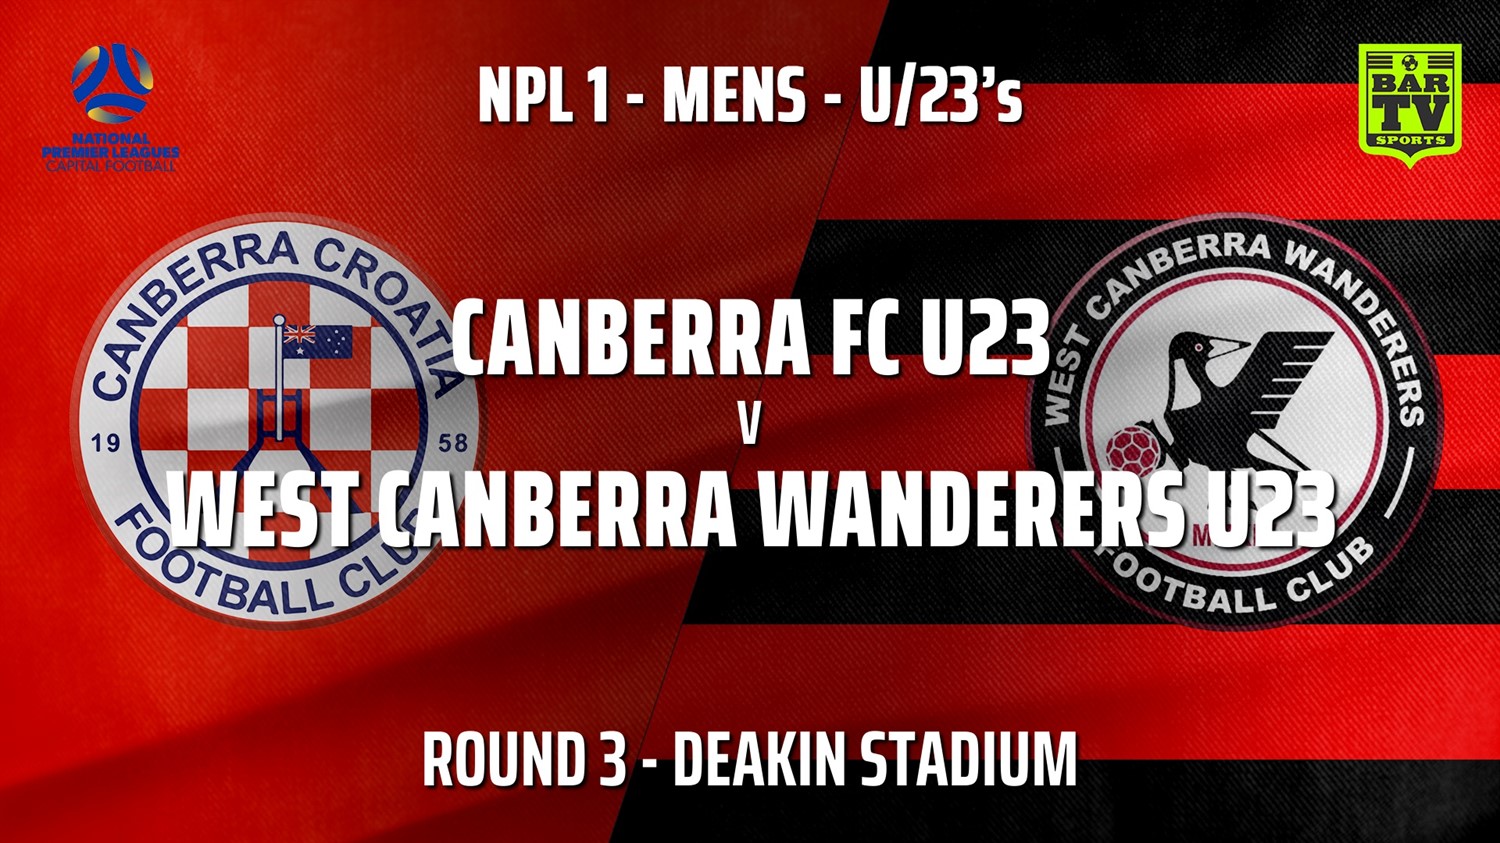 210421-NPL1 U23 Capital Round 3 - Canberra FC U23 v West Canberra Wanderers U23 Minigame Slate Image